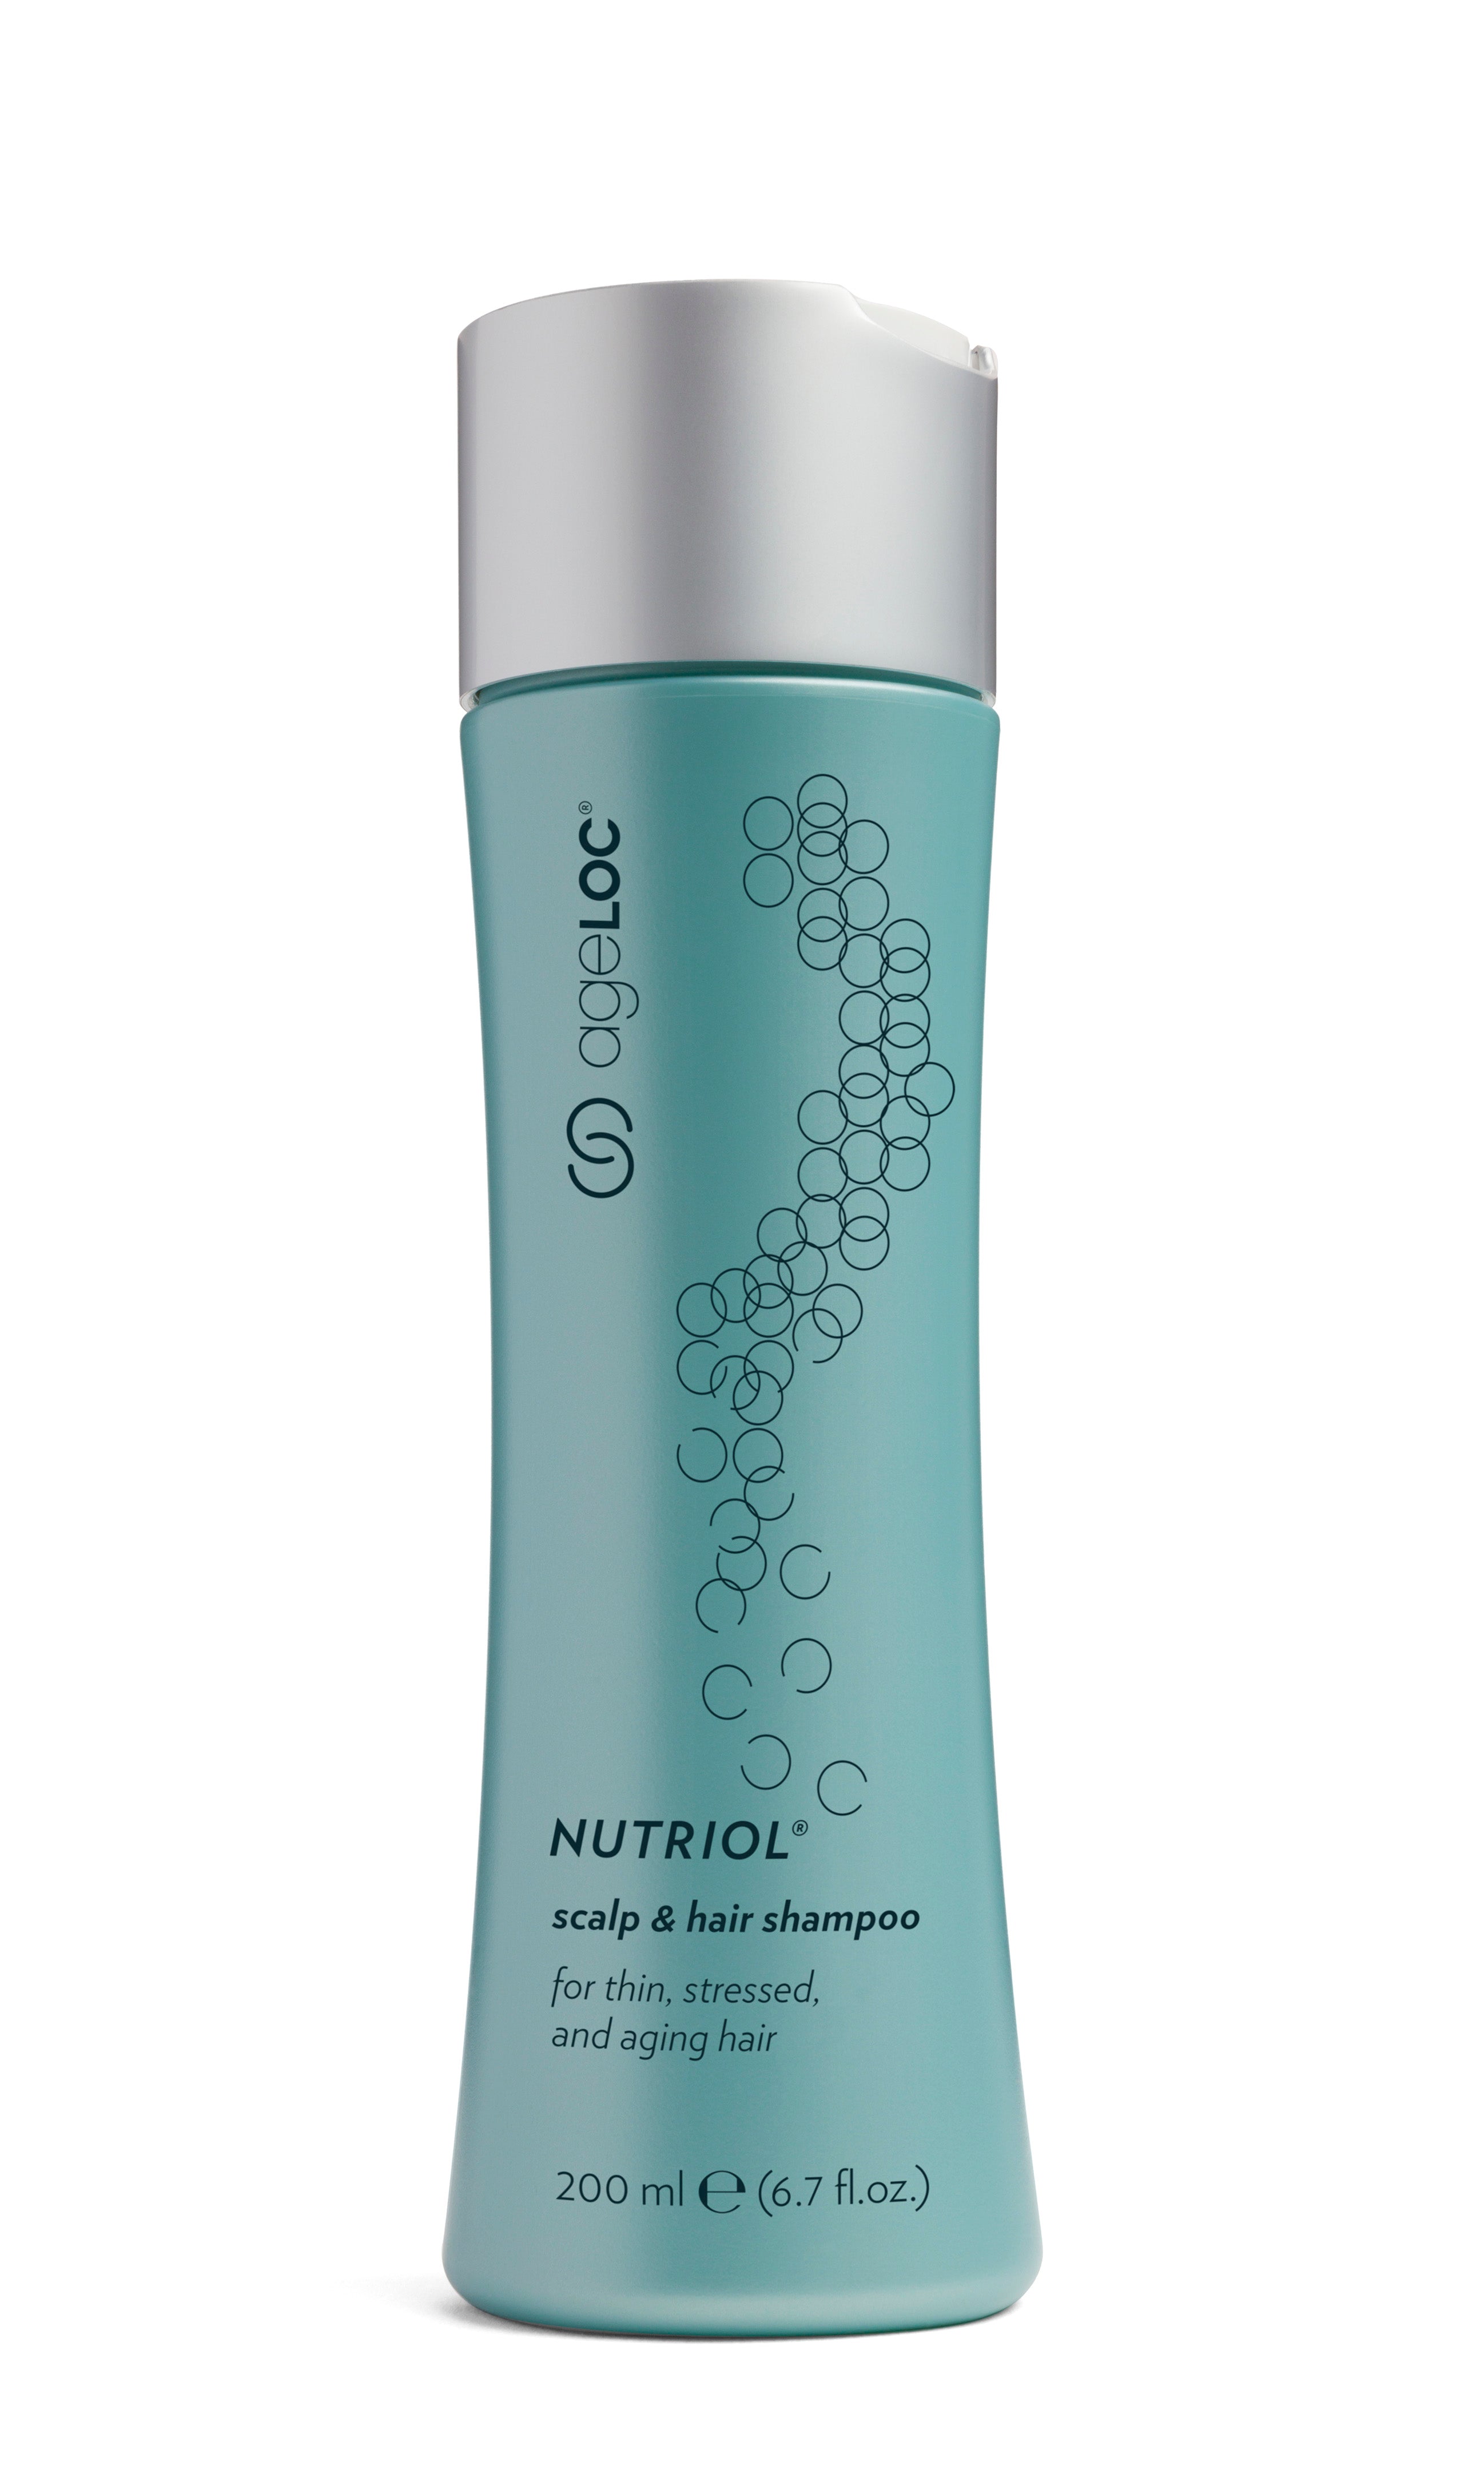 ageLOC Nutriol Scalp & Hair Shampoo